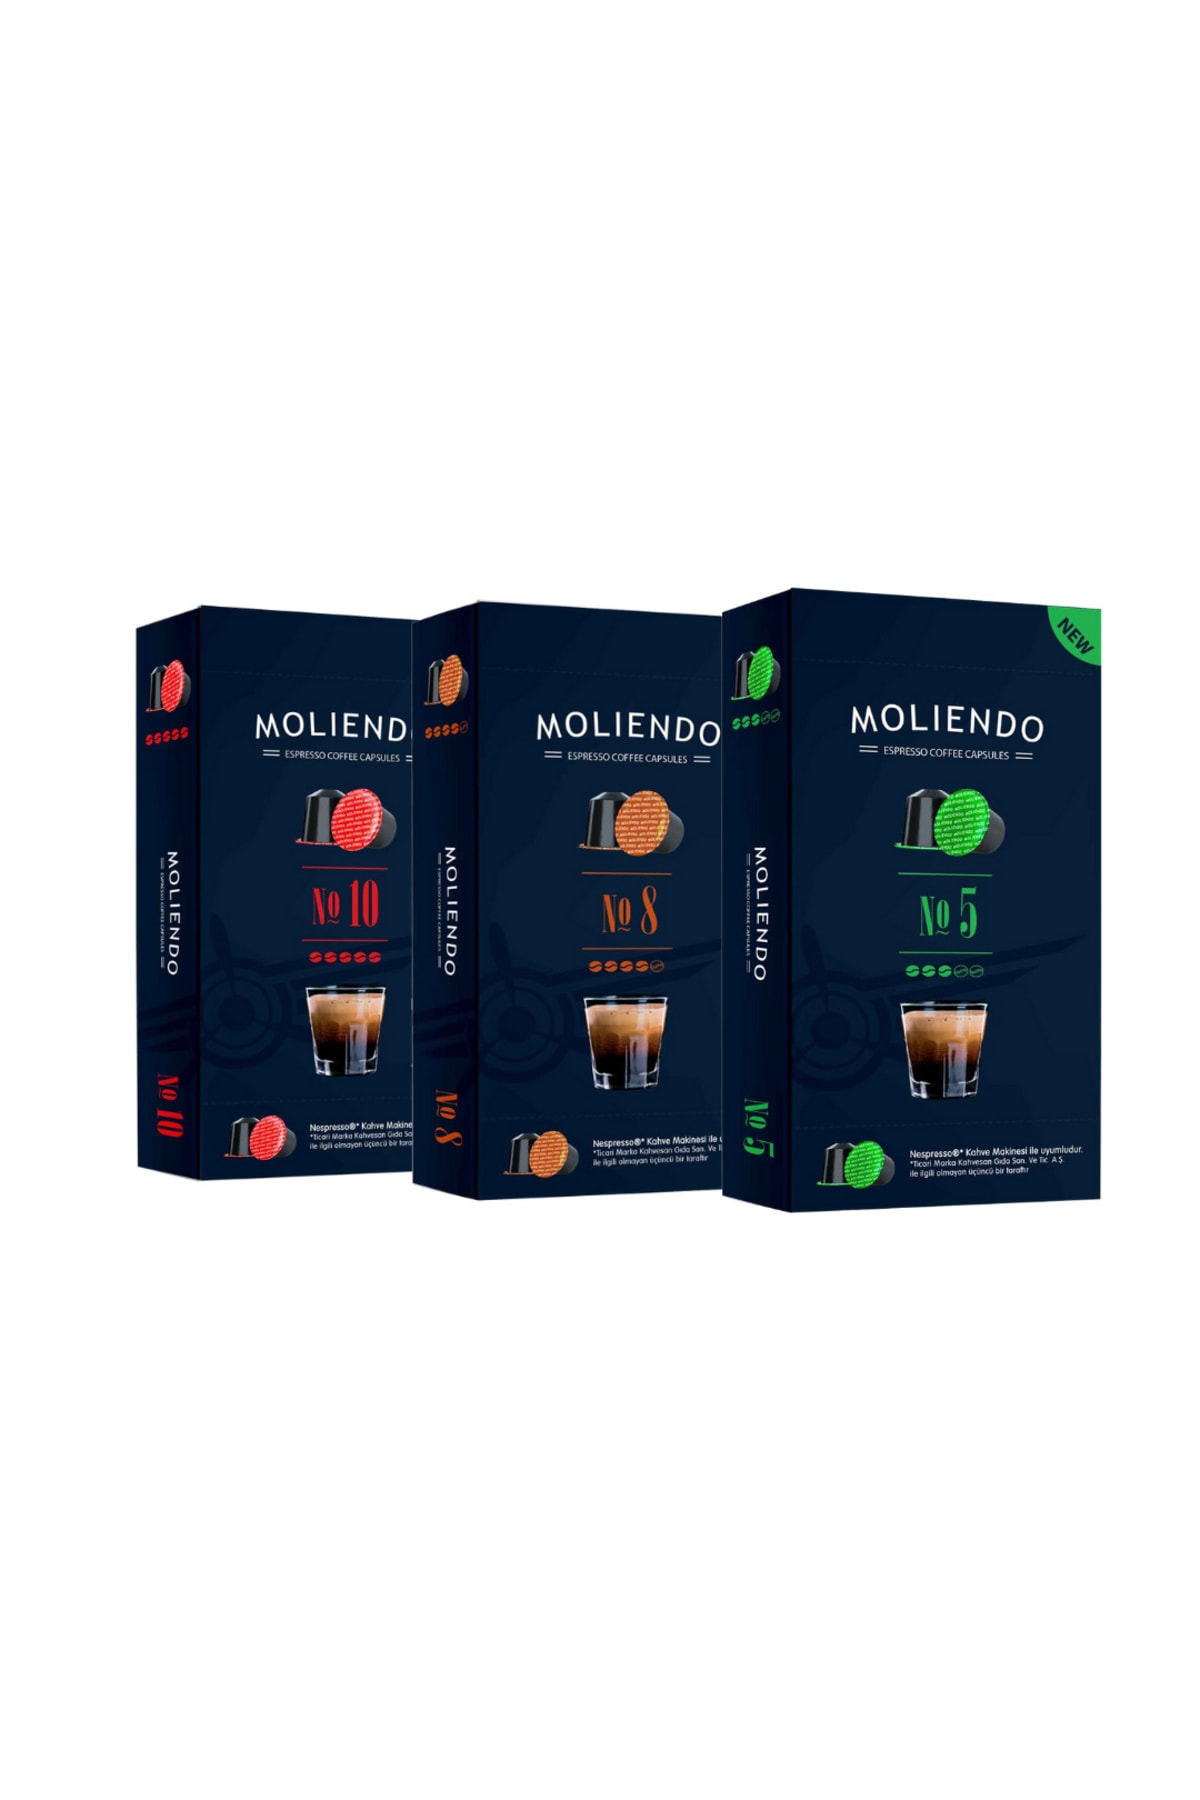 Moliendo Finest Coffee Kapsül Kahve Tanışma Paketi (3x10 Nespresso Uyumlu Kapsül Kahve)